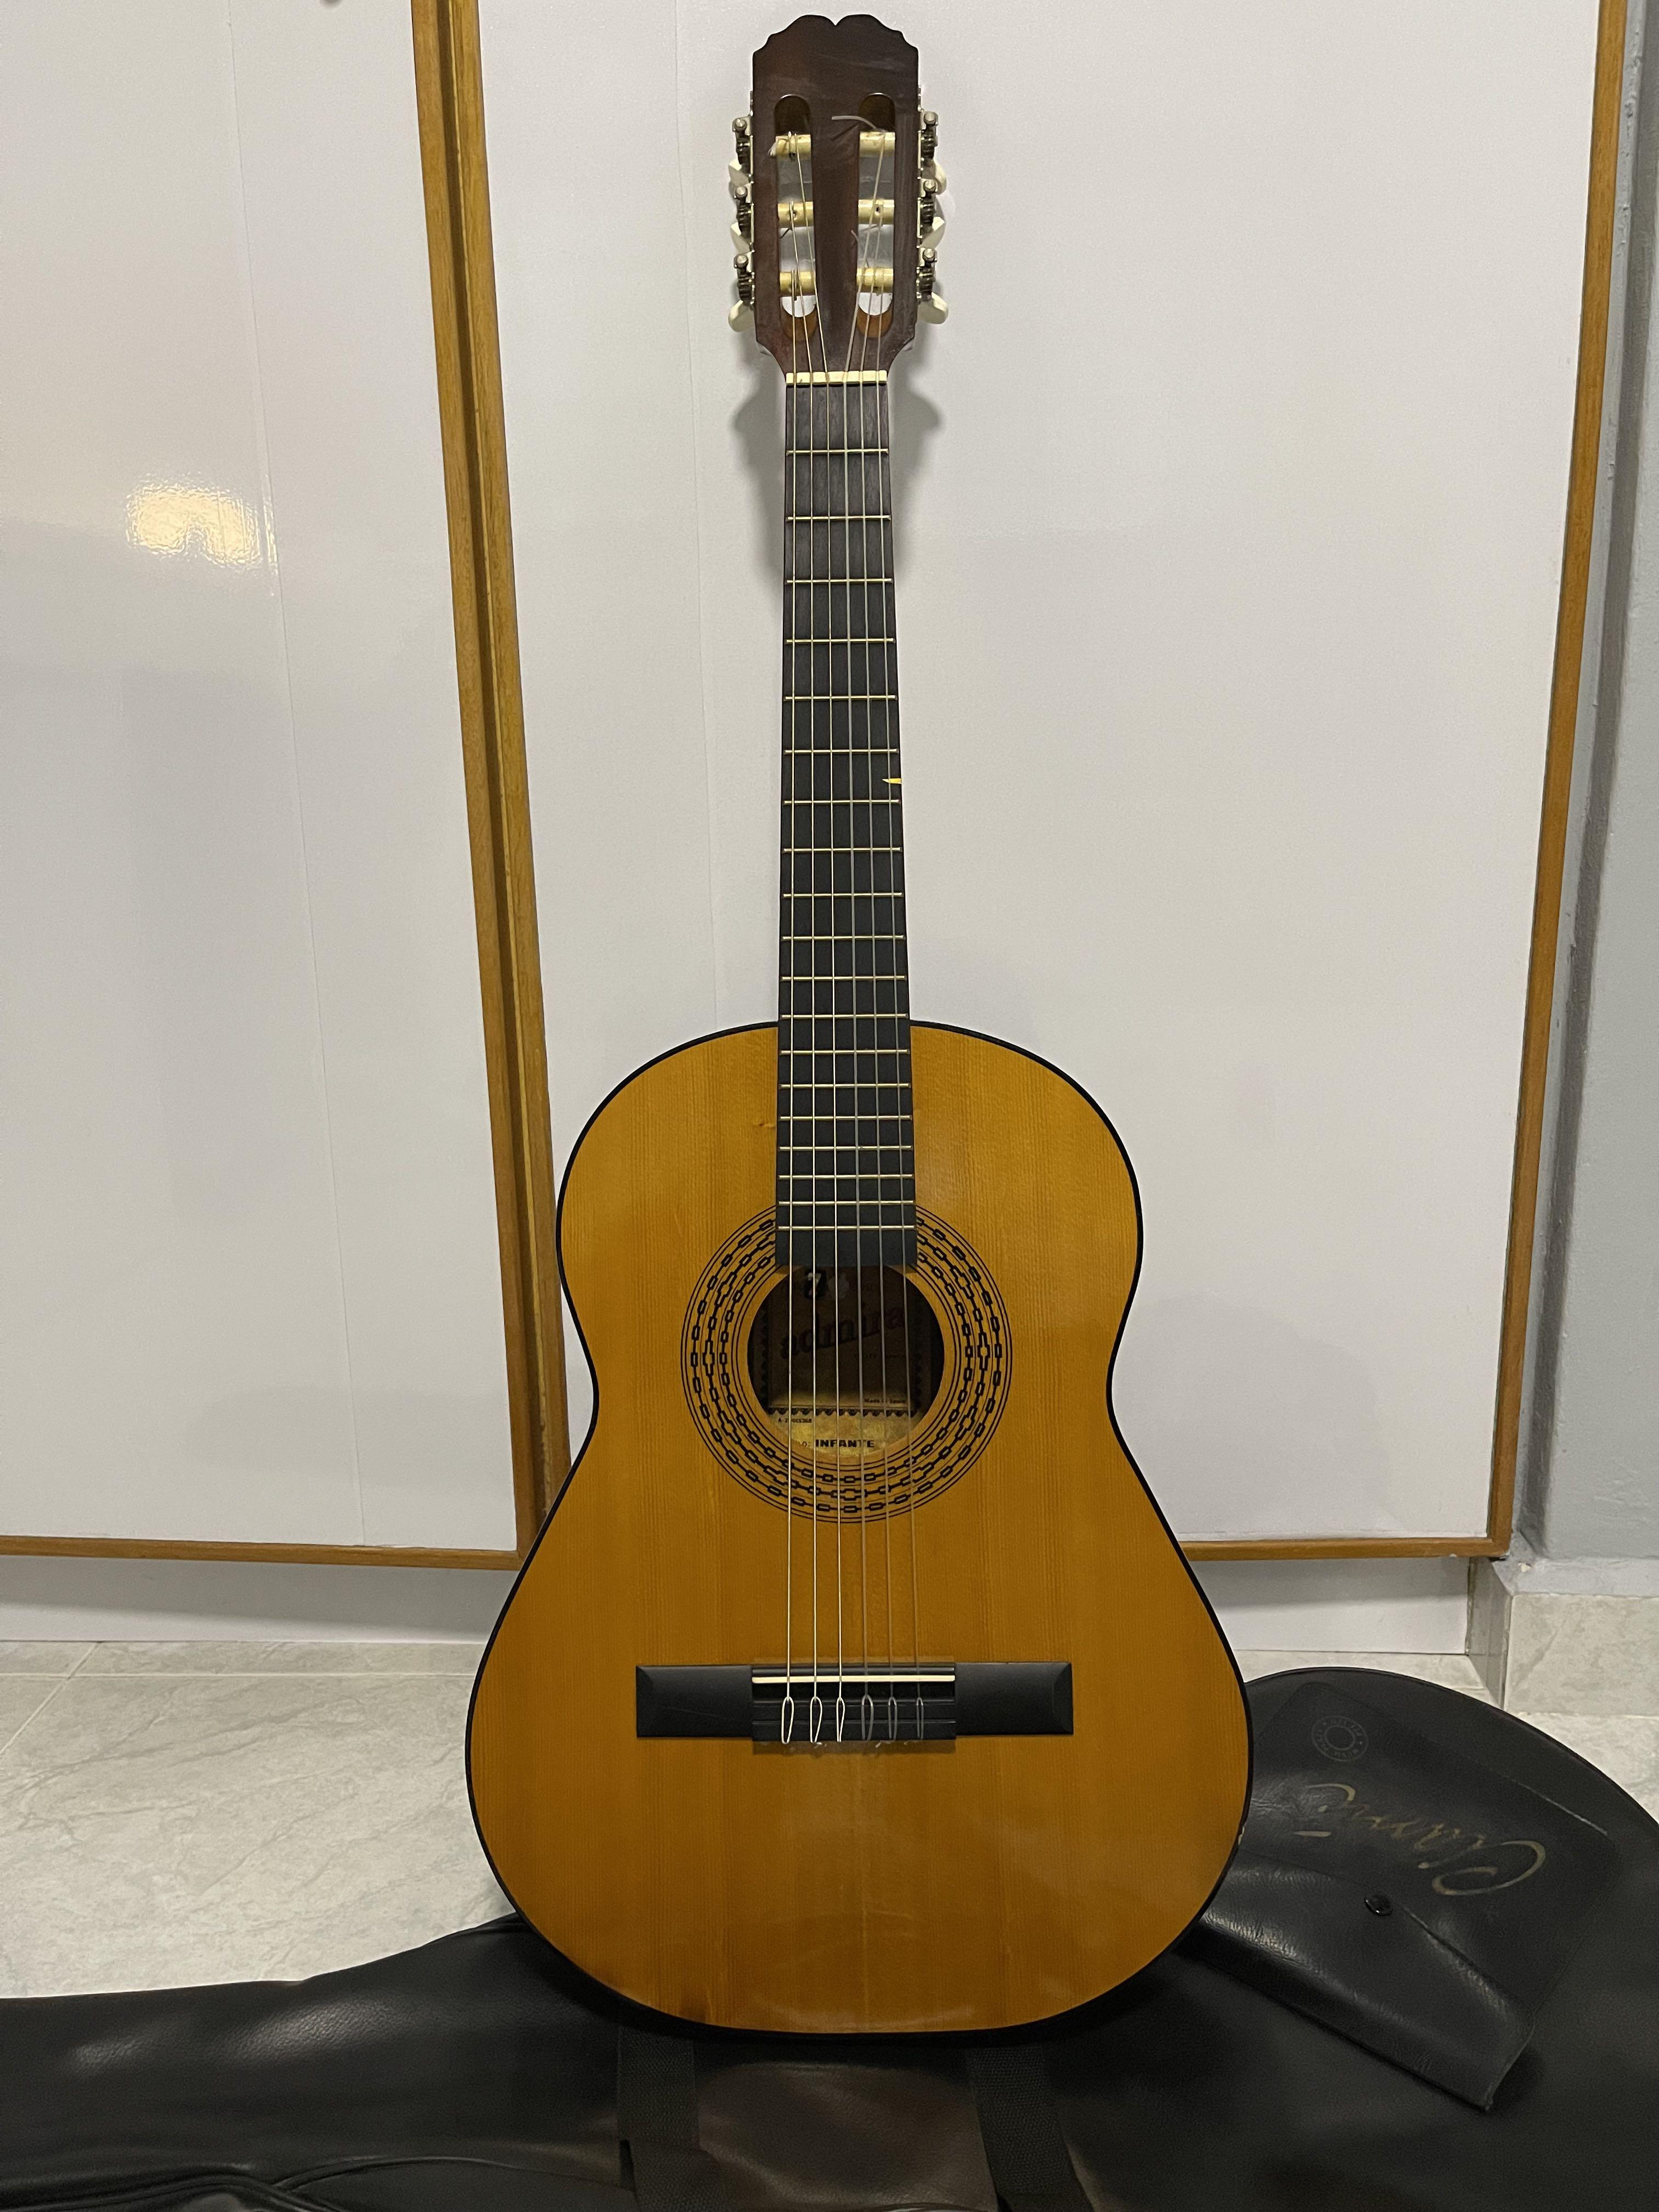 Or Disgraceful Contain Admira autentica guitarra, KELLER-ESPANA, Made in Spain, A-20015368,  modelo:CONCERT BM classic guitar, Hobbies & Toys, Music & Media, Musical  Instruments on Carousell